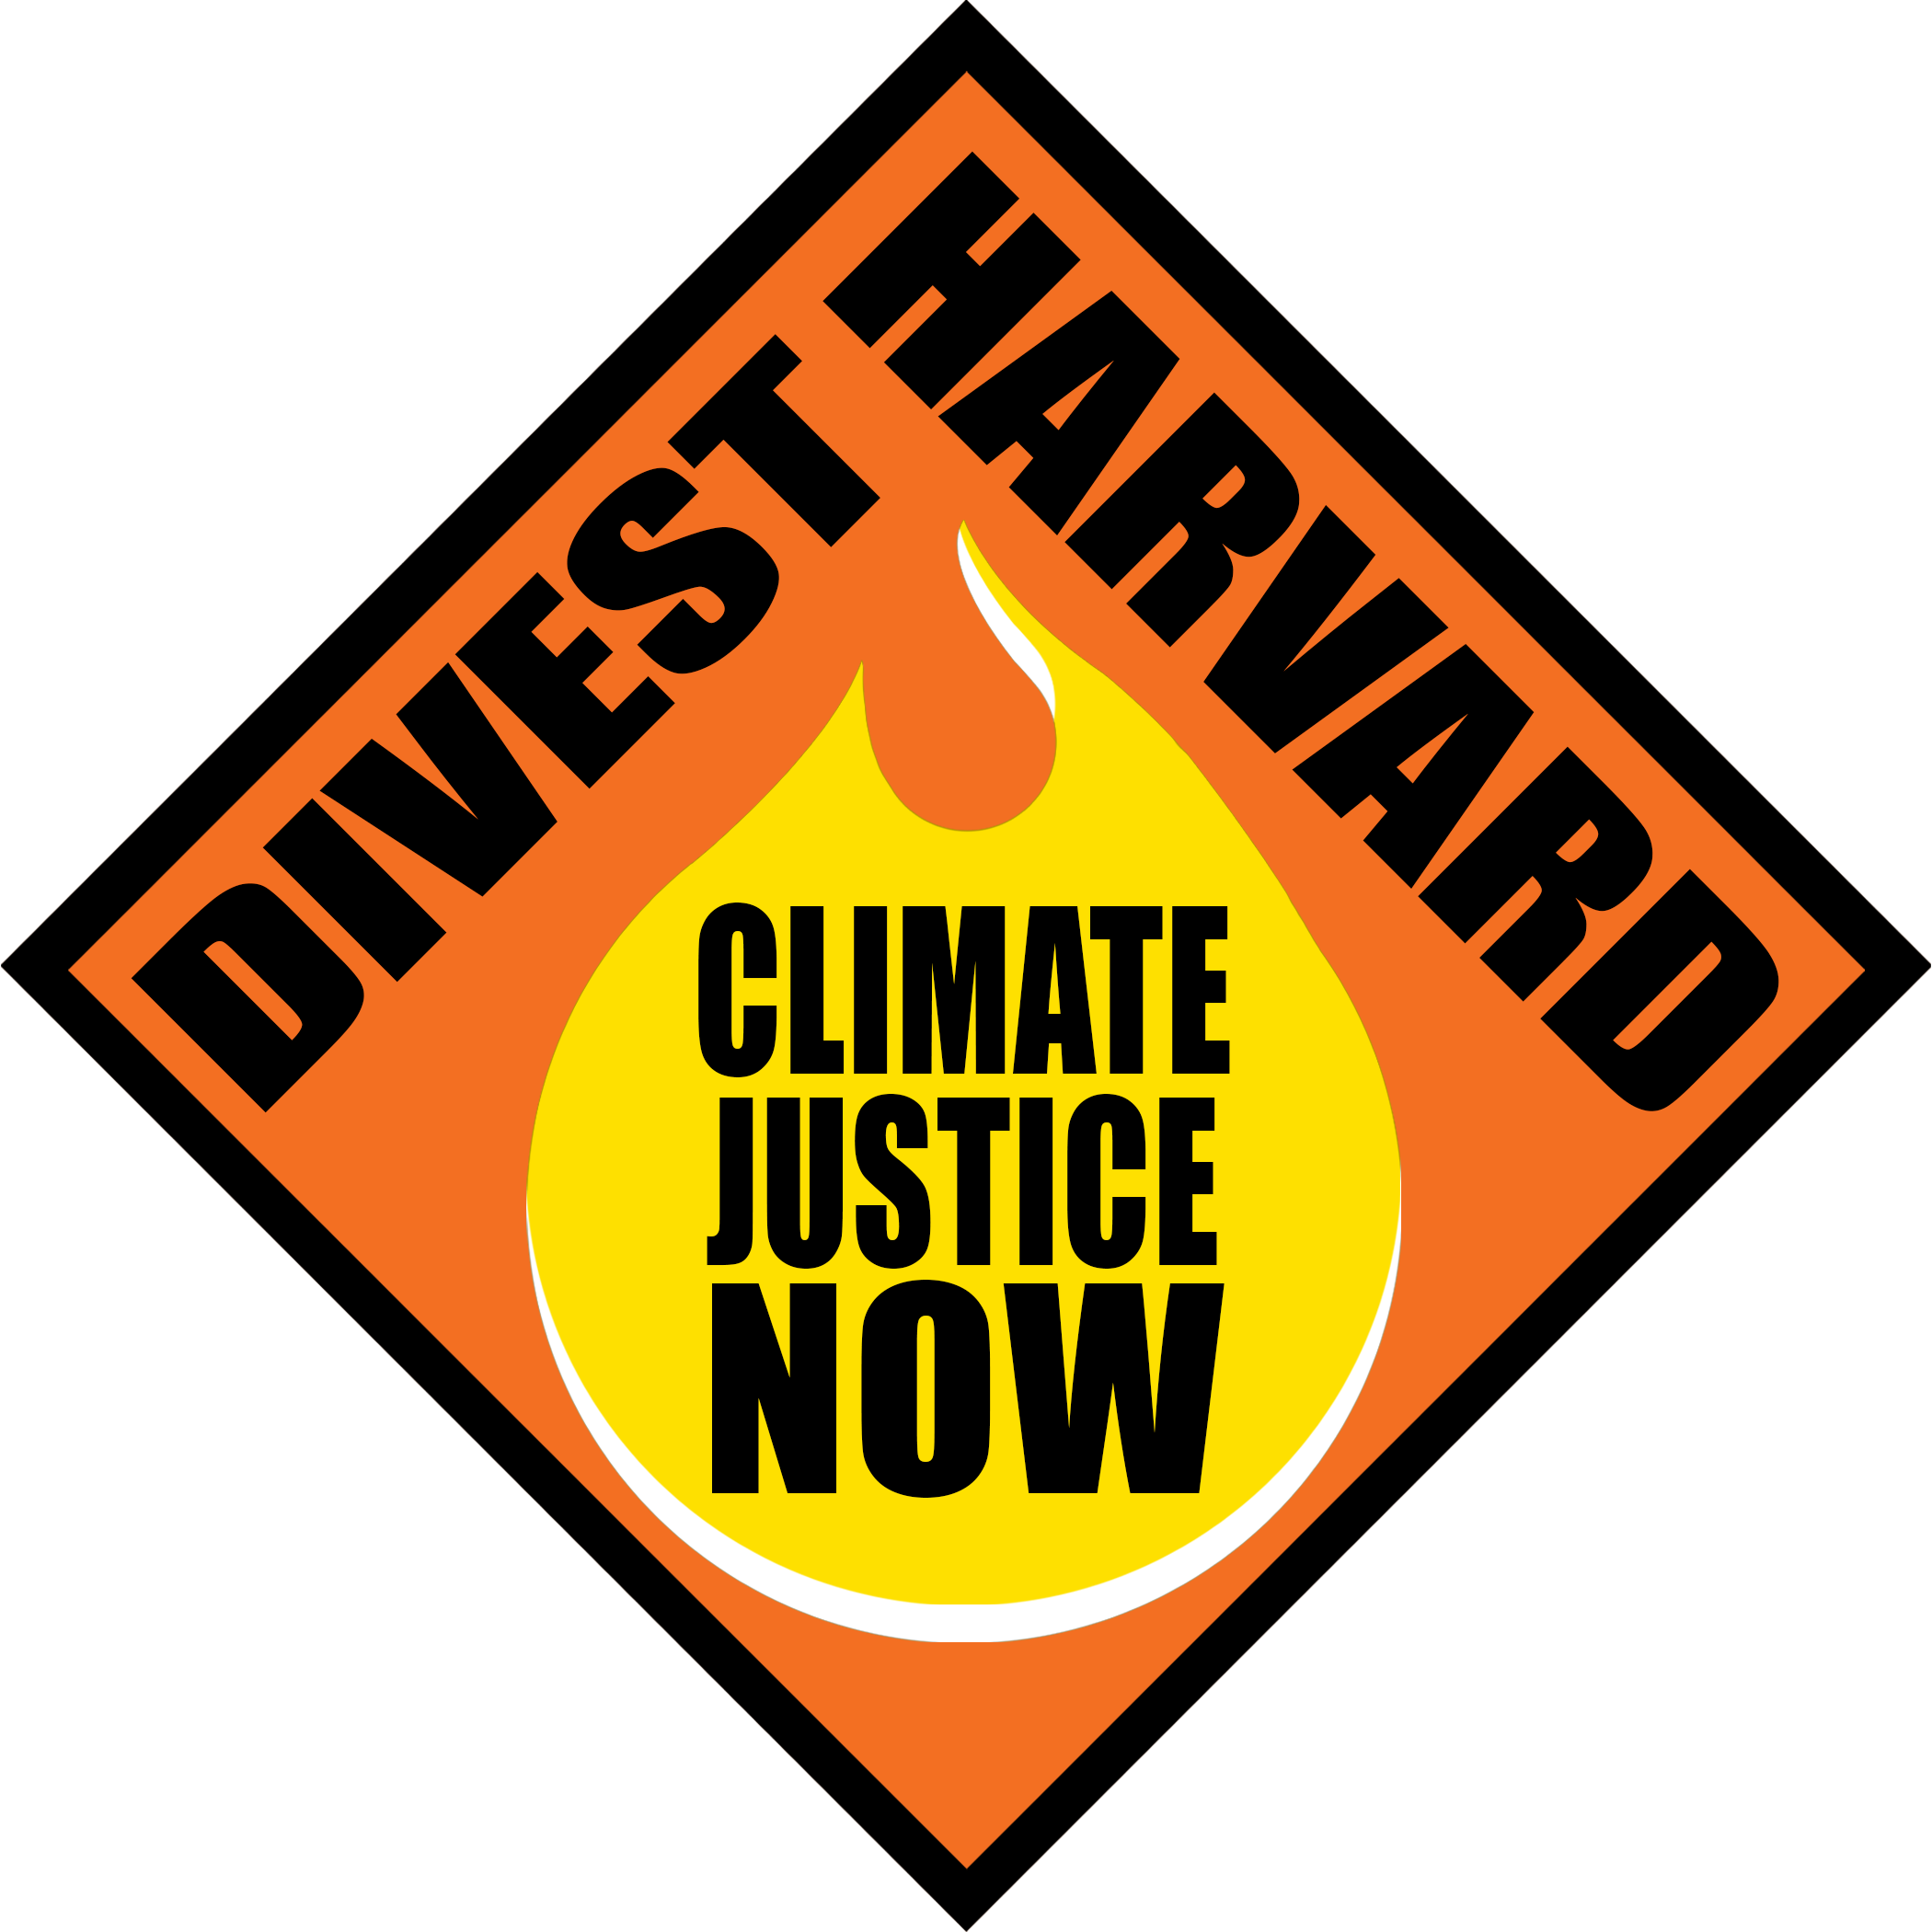 Fossil Free Divest Harvard